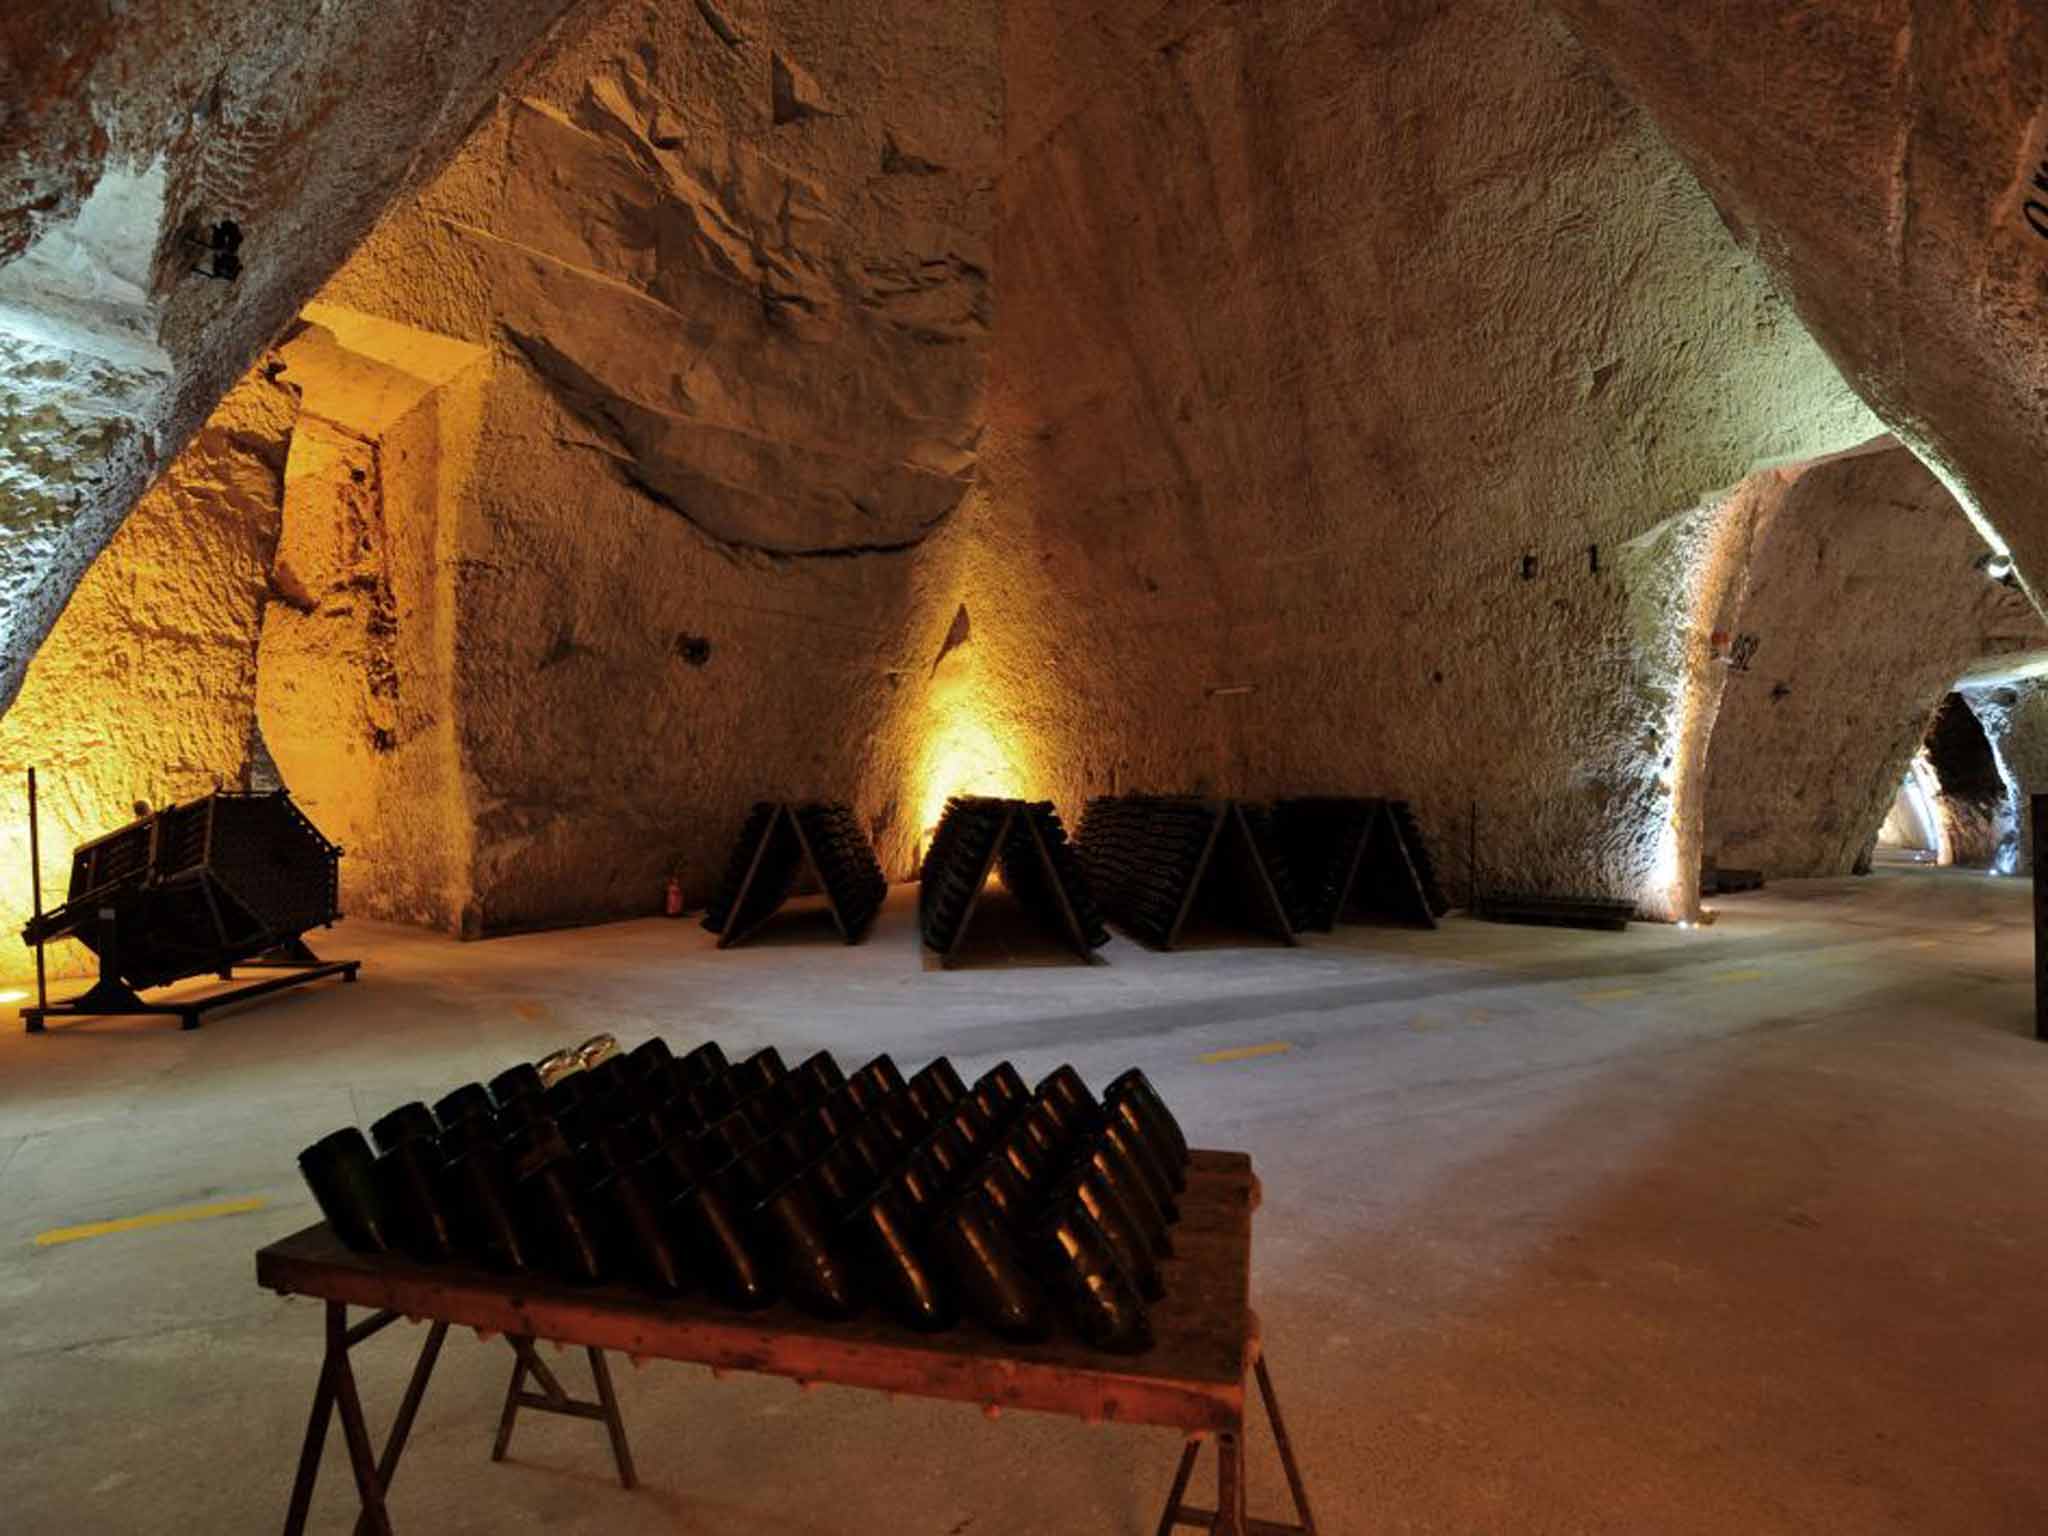 Veuve Clicquot's limestone cellars near Reims in France